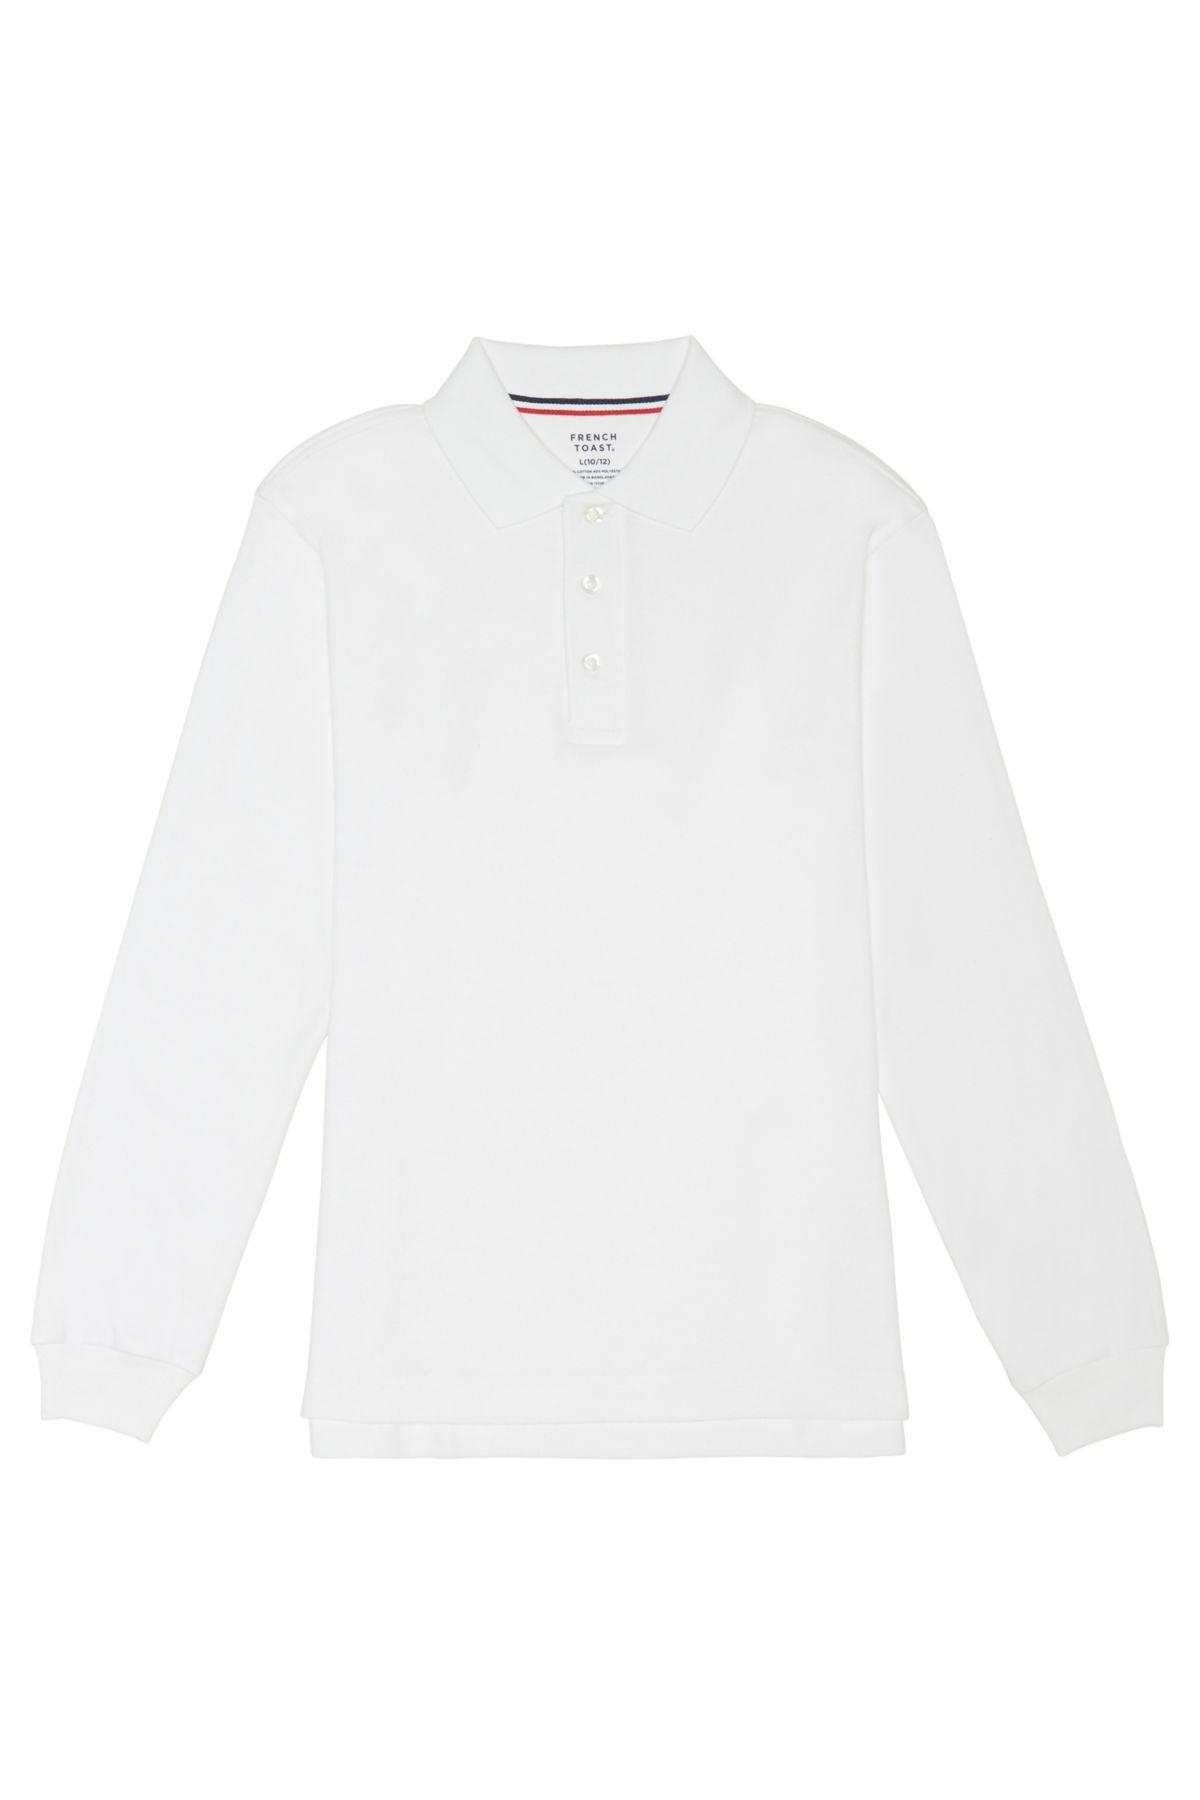 French Toast School Uniform Girls Short Sleeve Lace Yoke Polo Shirt